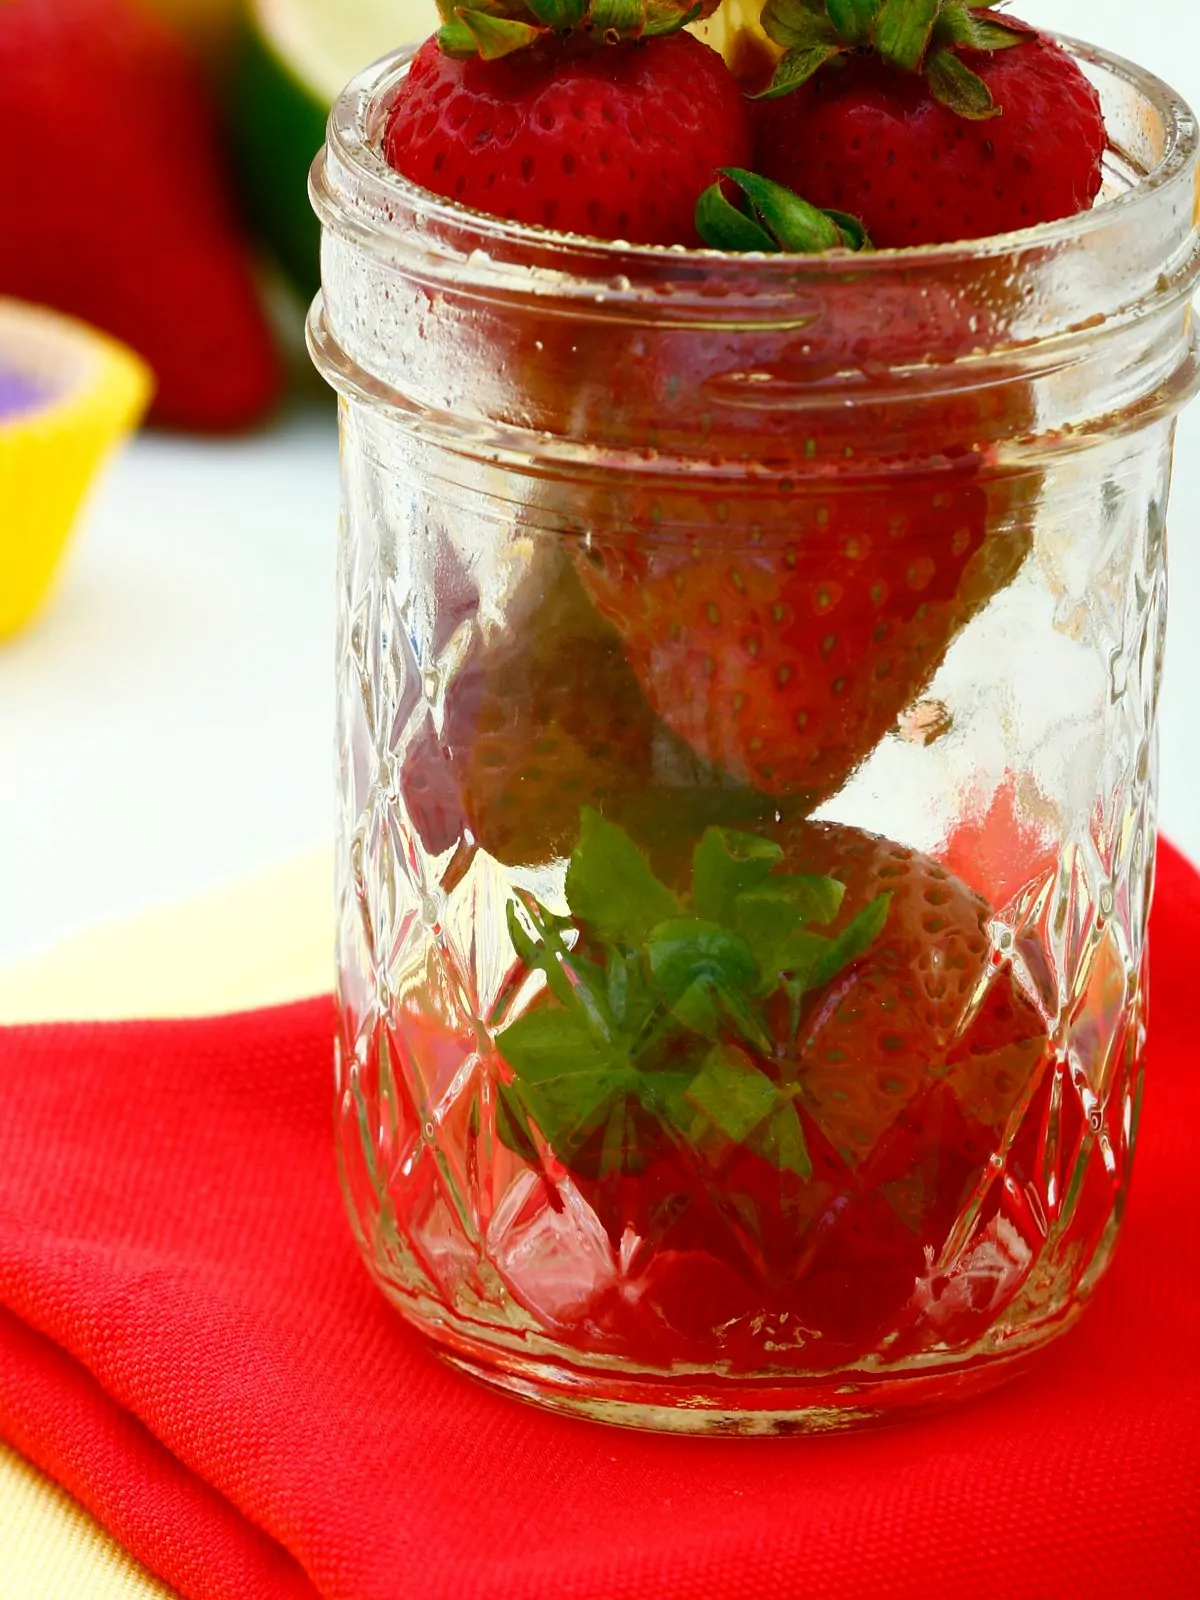 Strawberries in mason jar on red cloth.